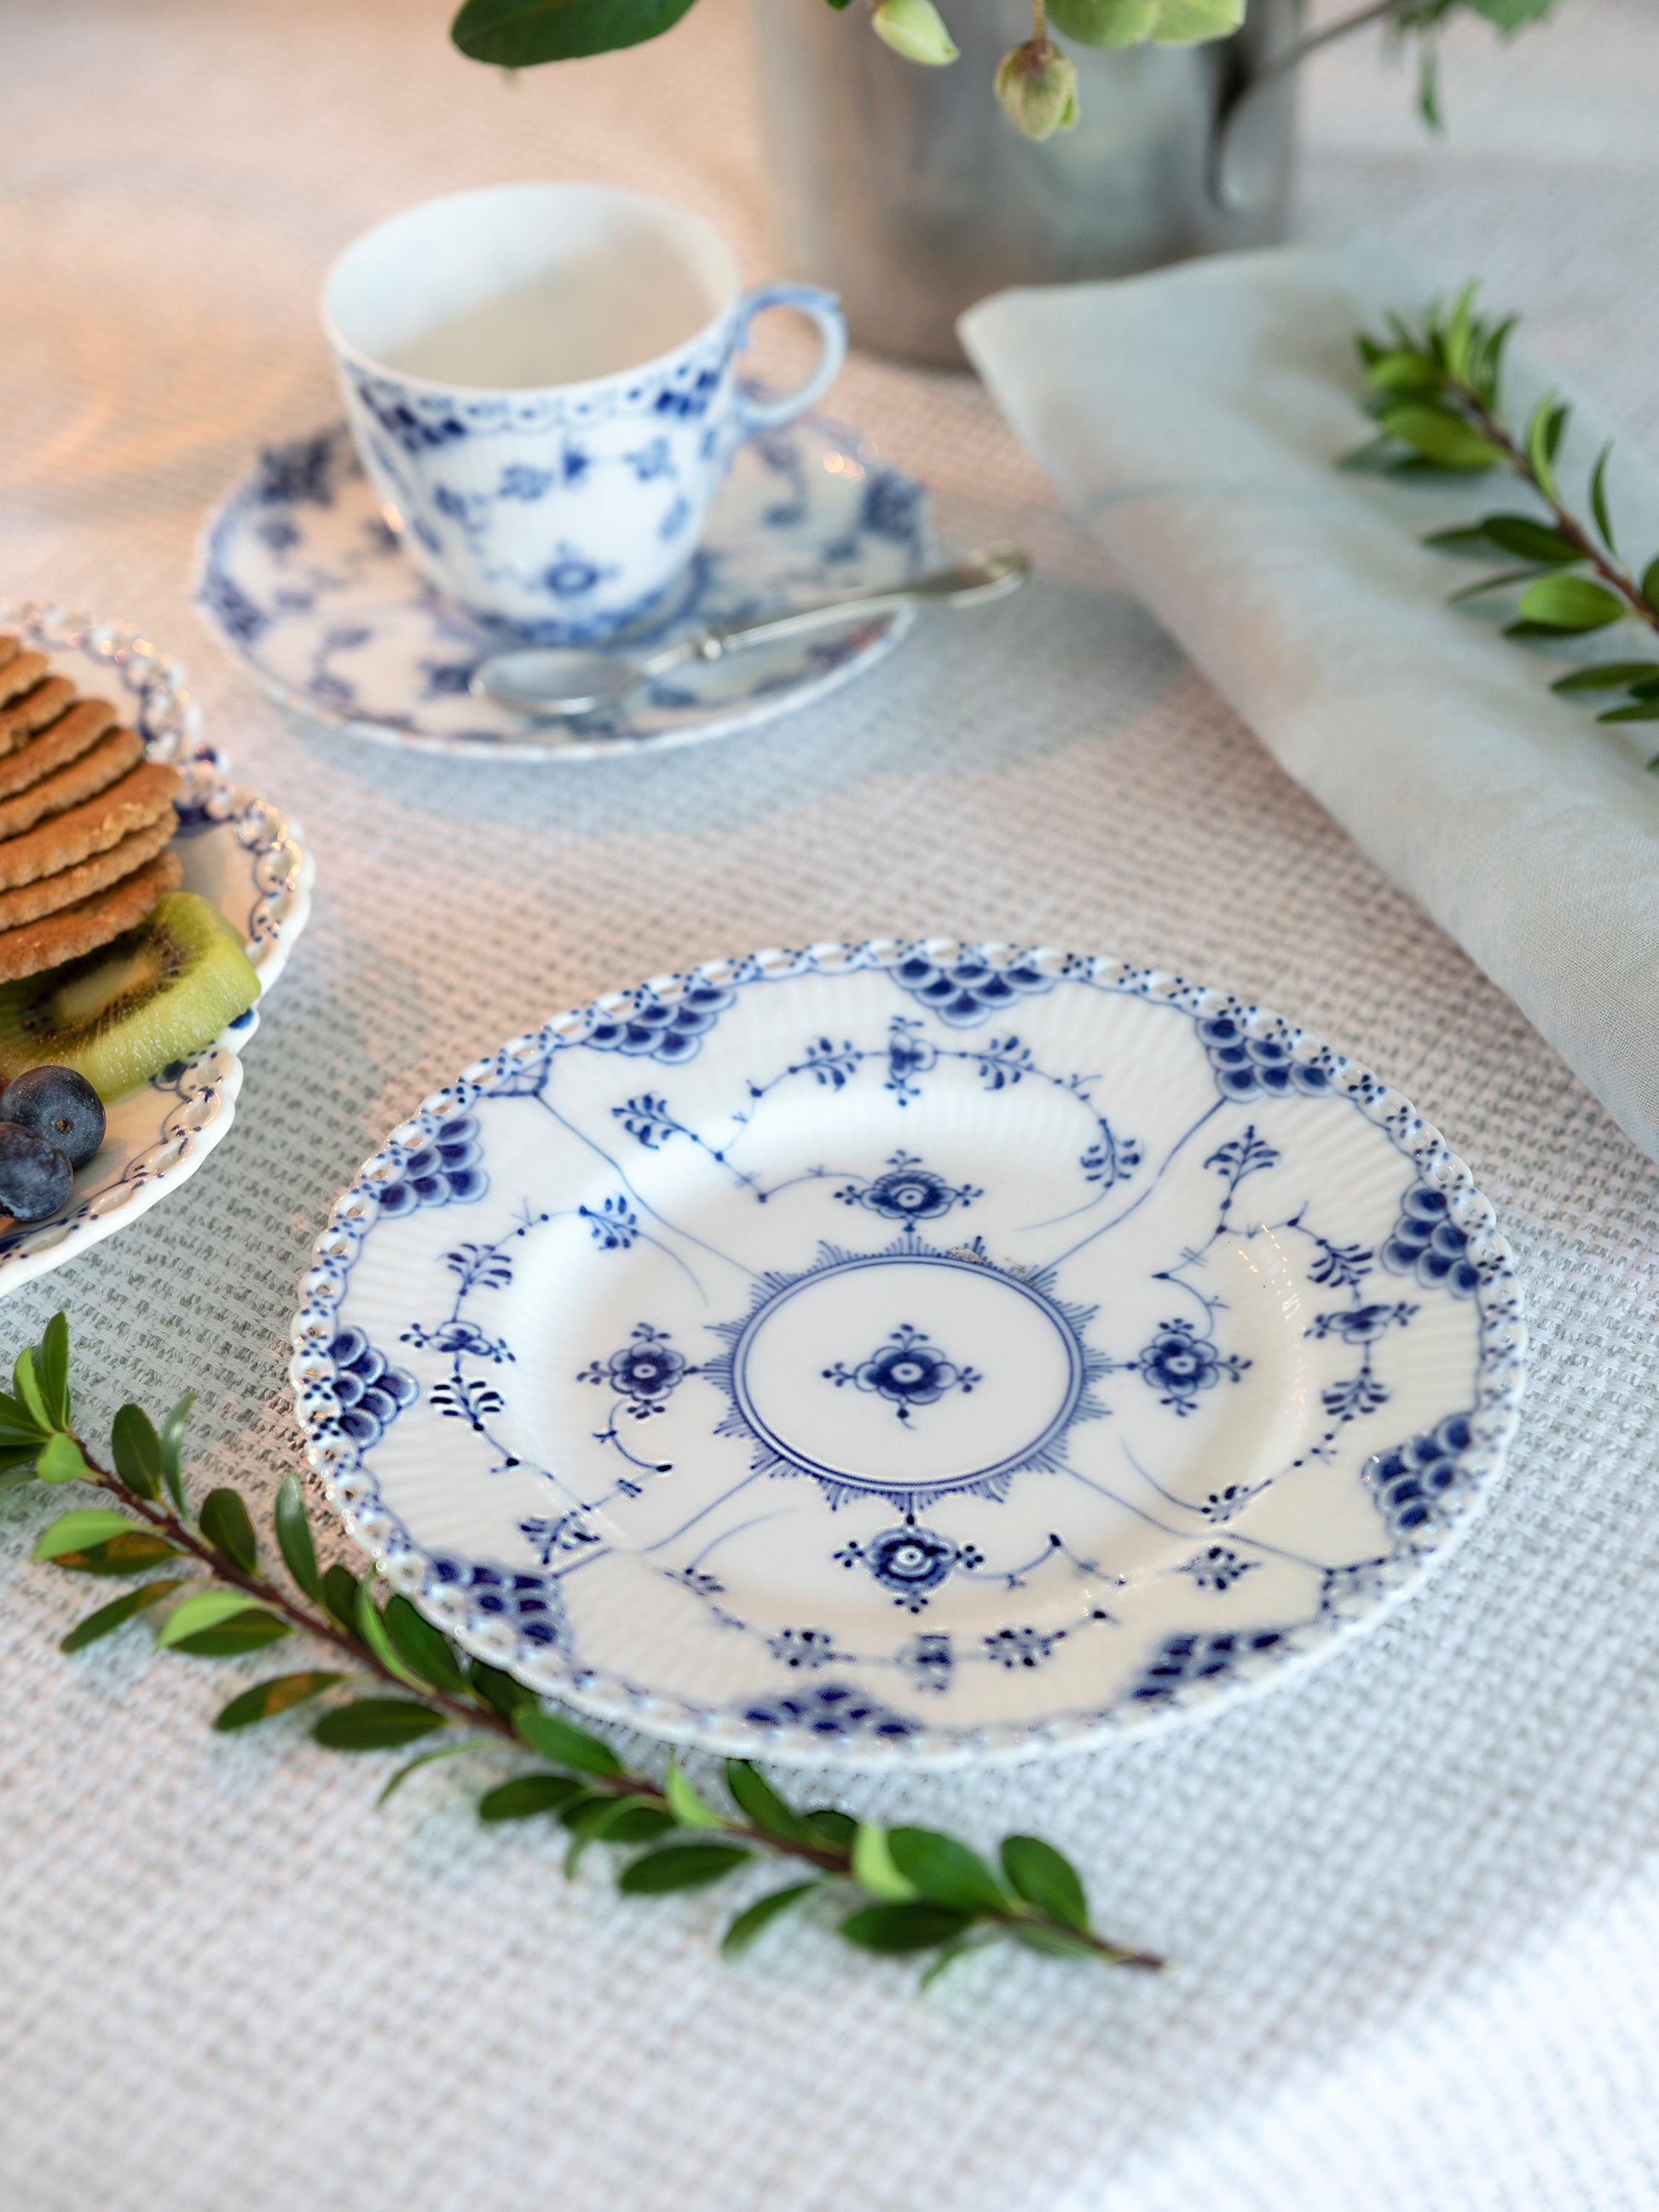 Vintage Royal Copenhagen Blue Fluted Full Lace Round Serving Platter Weston Table